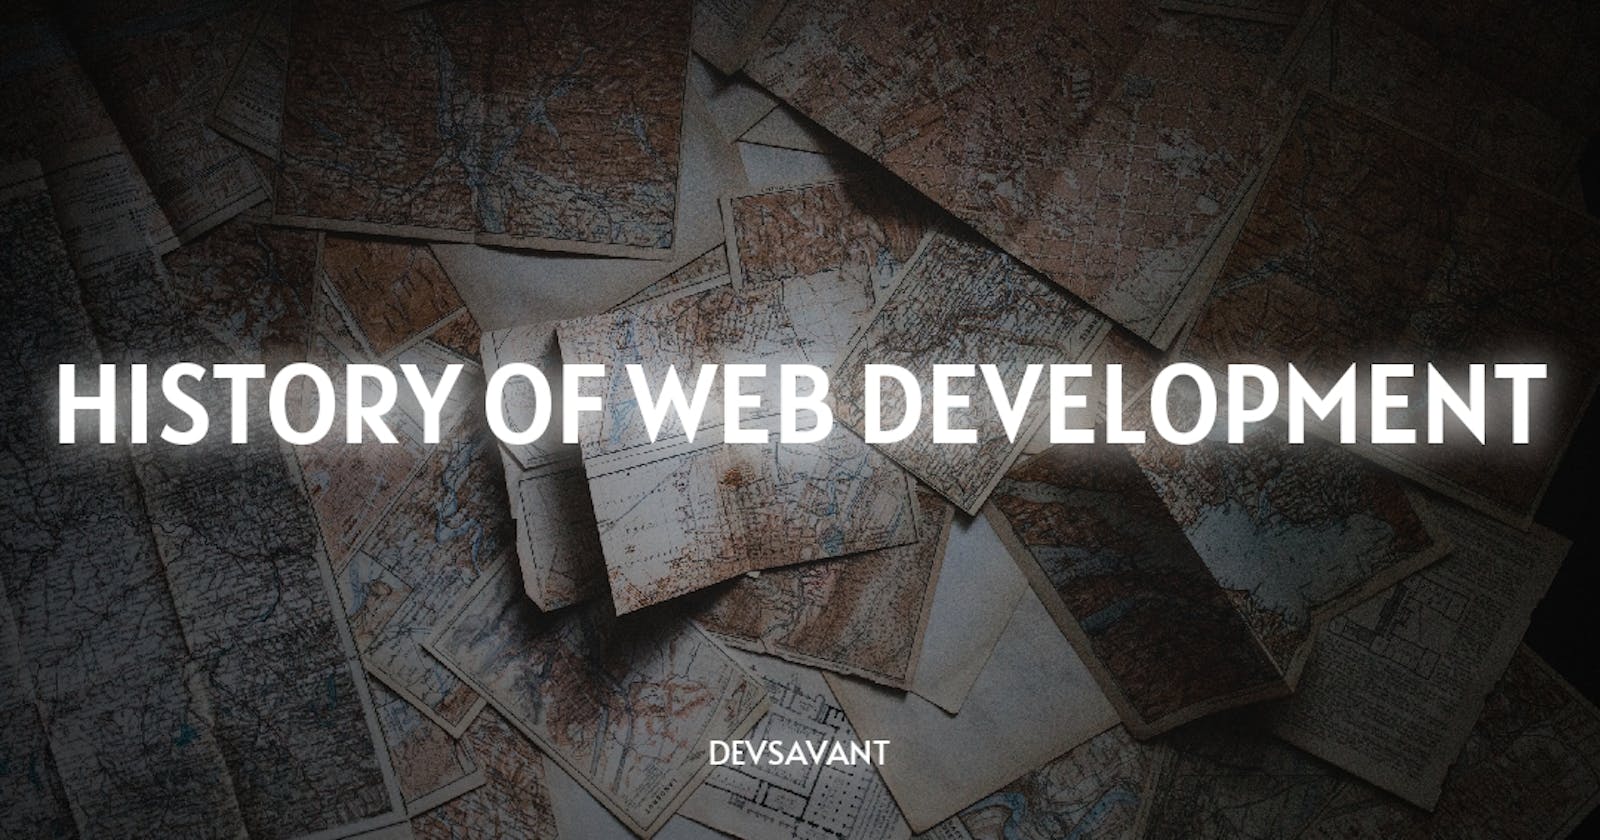 Web Development Evolution: Tracing the Historical Milestones